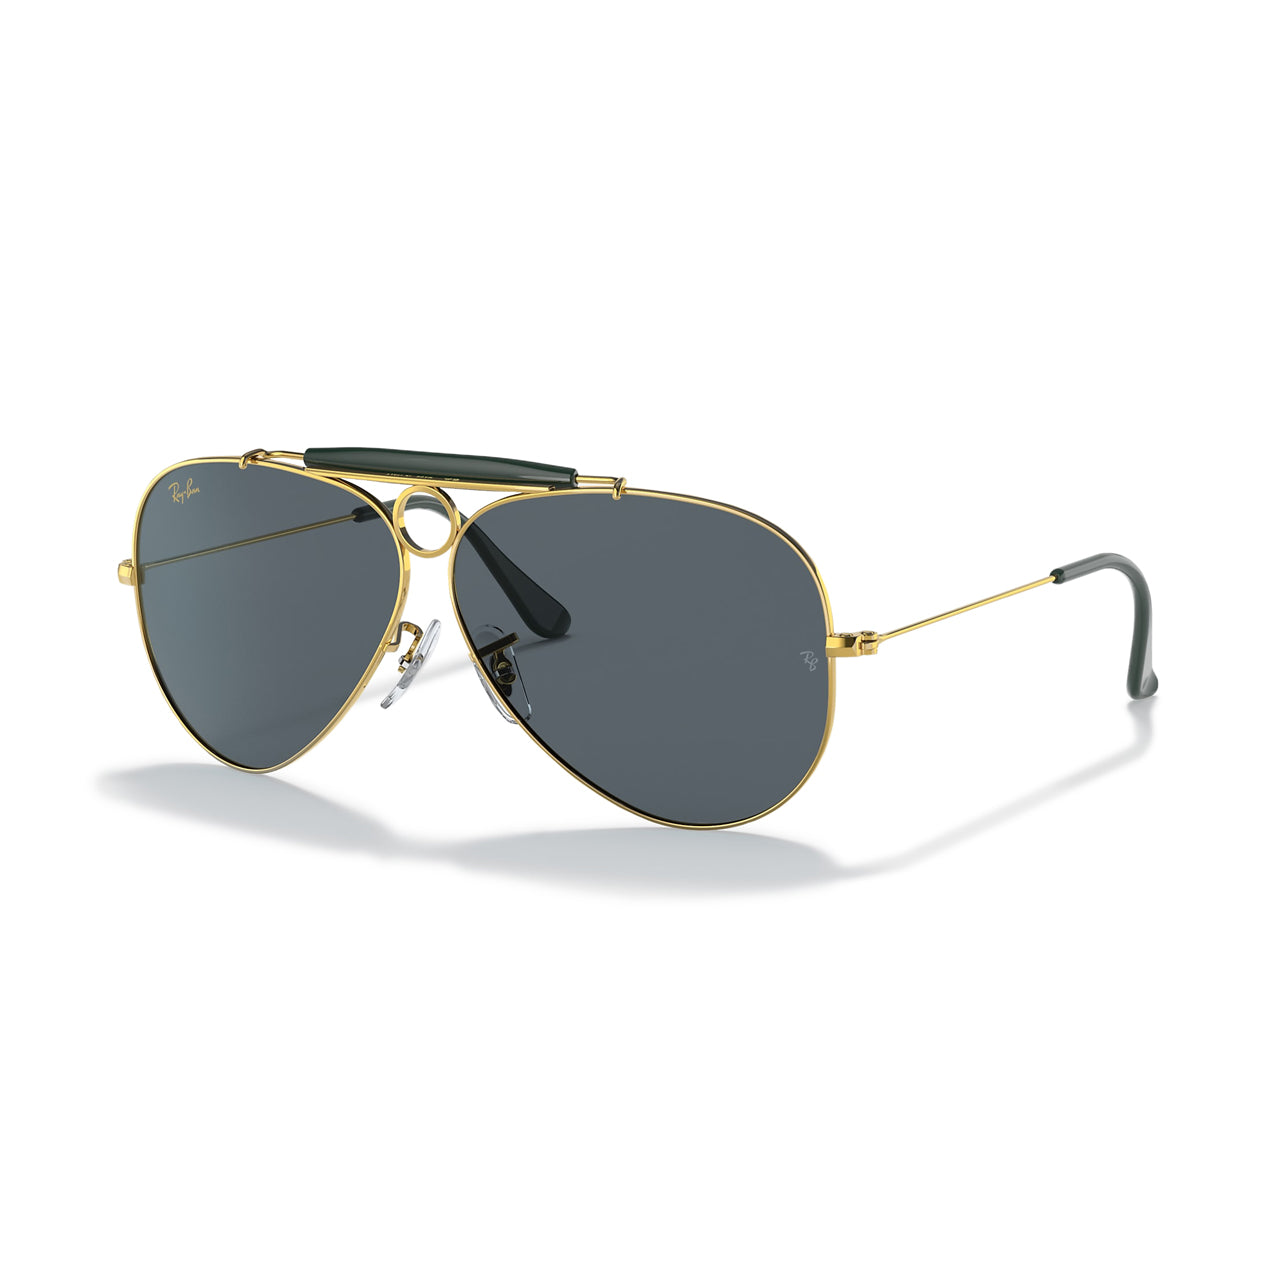 Ray-Ban Oval Flat Lens Sunglasses | Sunglasses, Ray ban round sunglasses,  Sunglasses women aviators